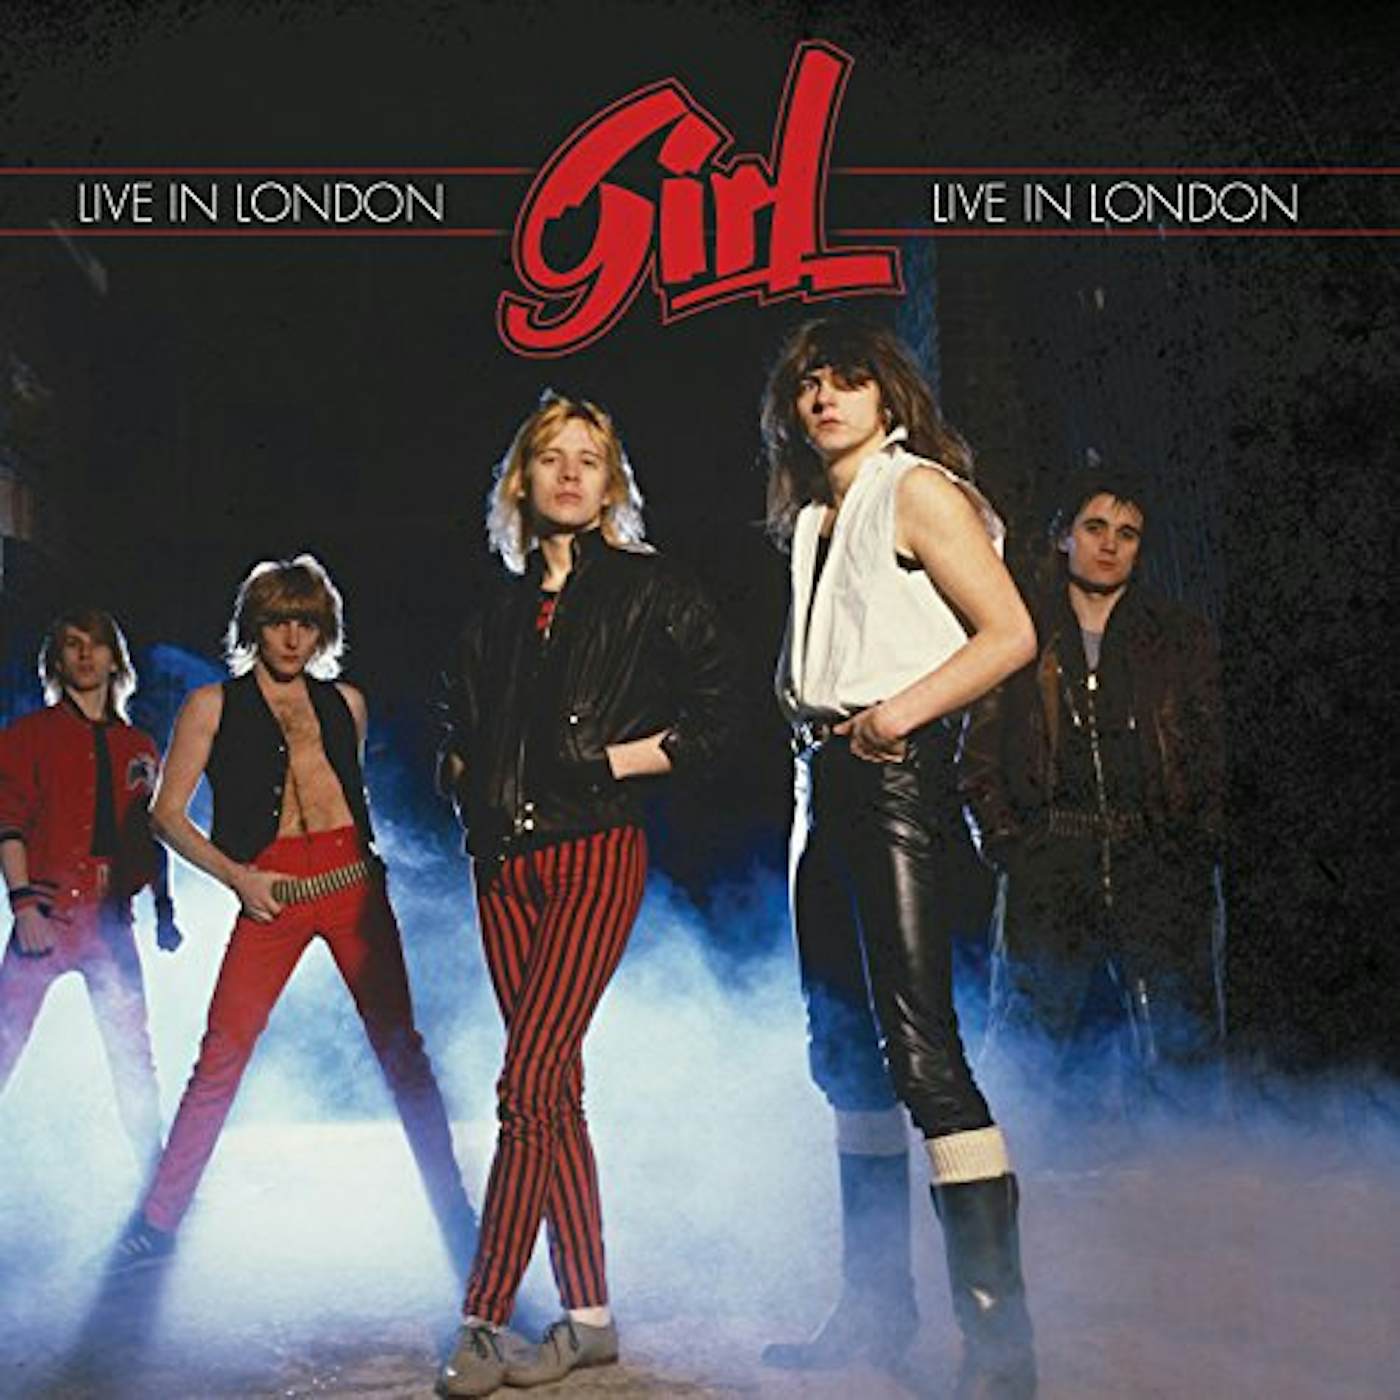 Girl LIVE IN LONDON-FEBRUARY 26 1980 CD